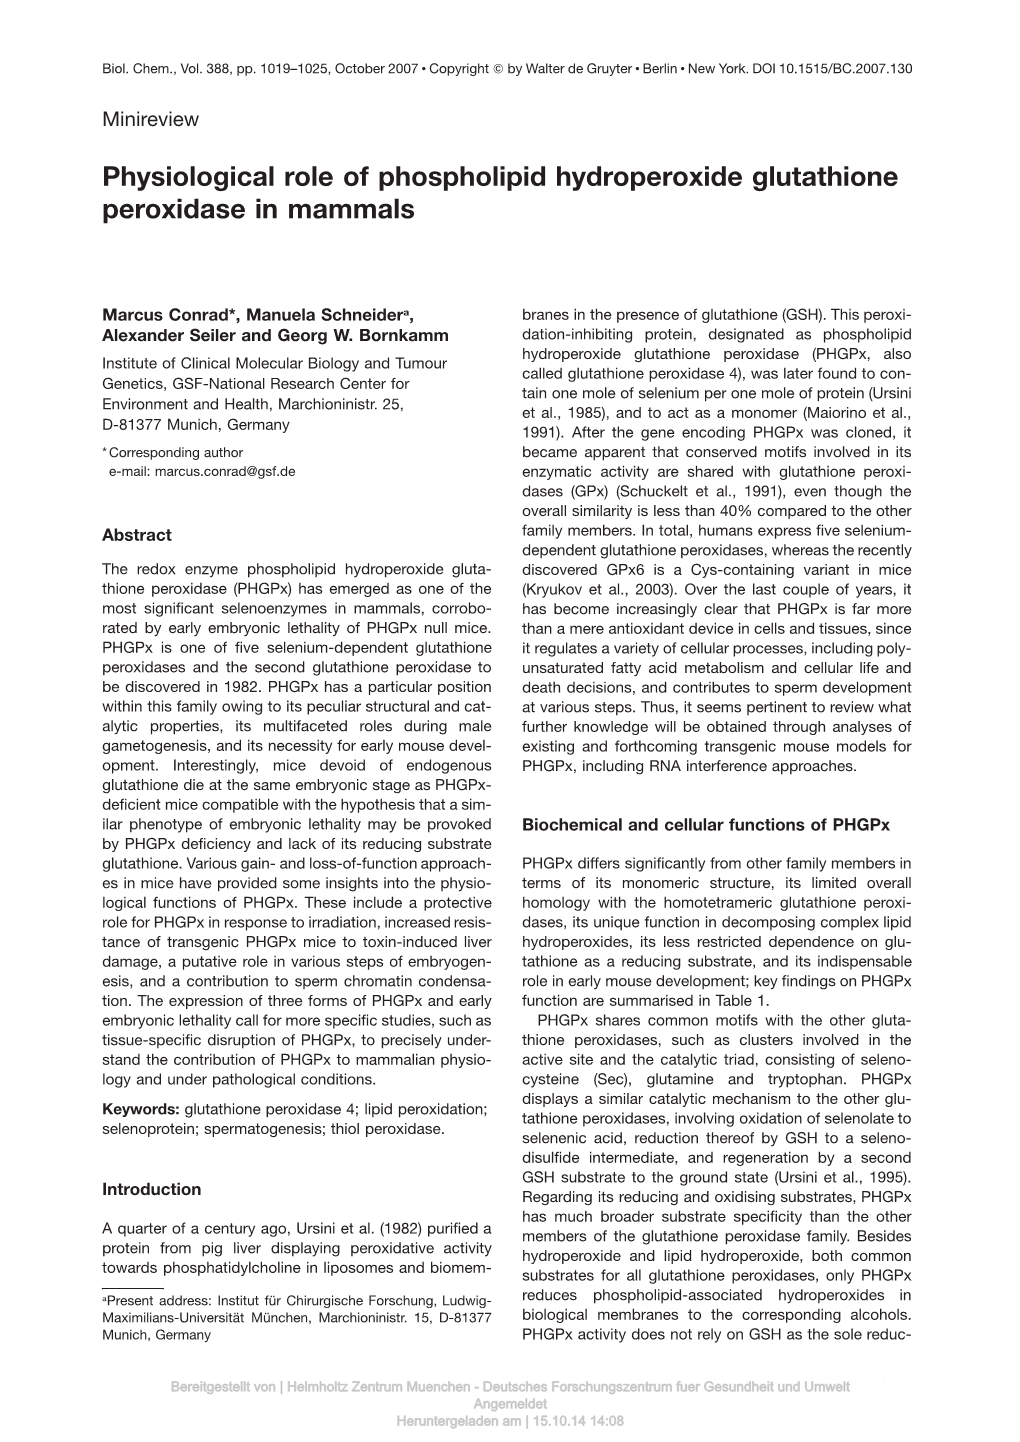 Physiological Role of Phospholipid Hydroperoxide Glutathione Peroxidase in Mammals